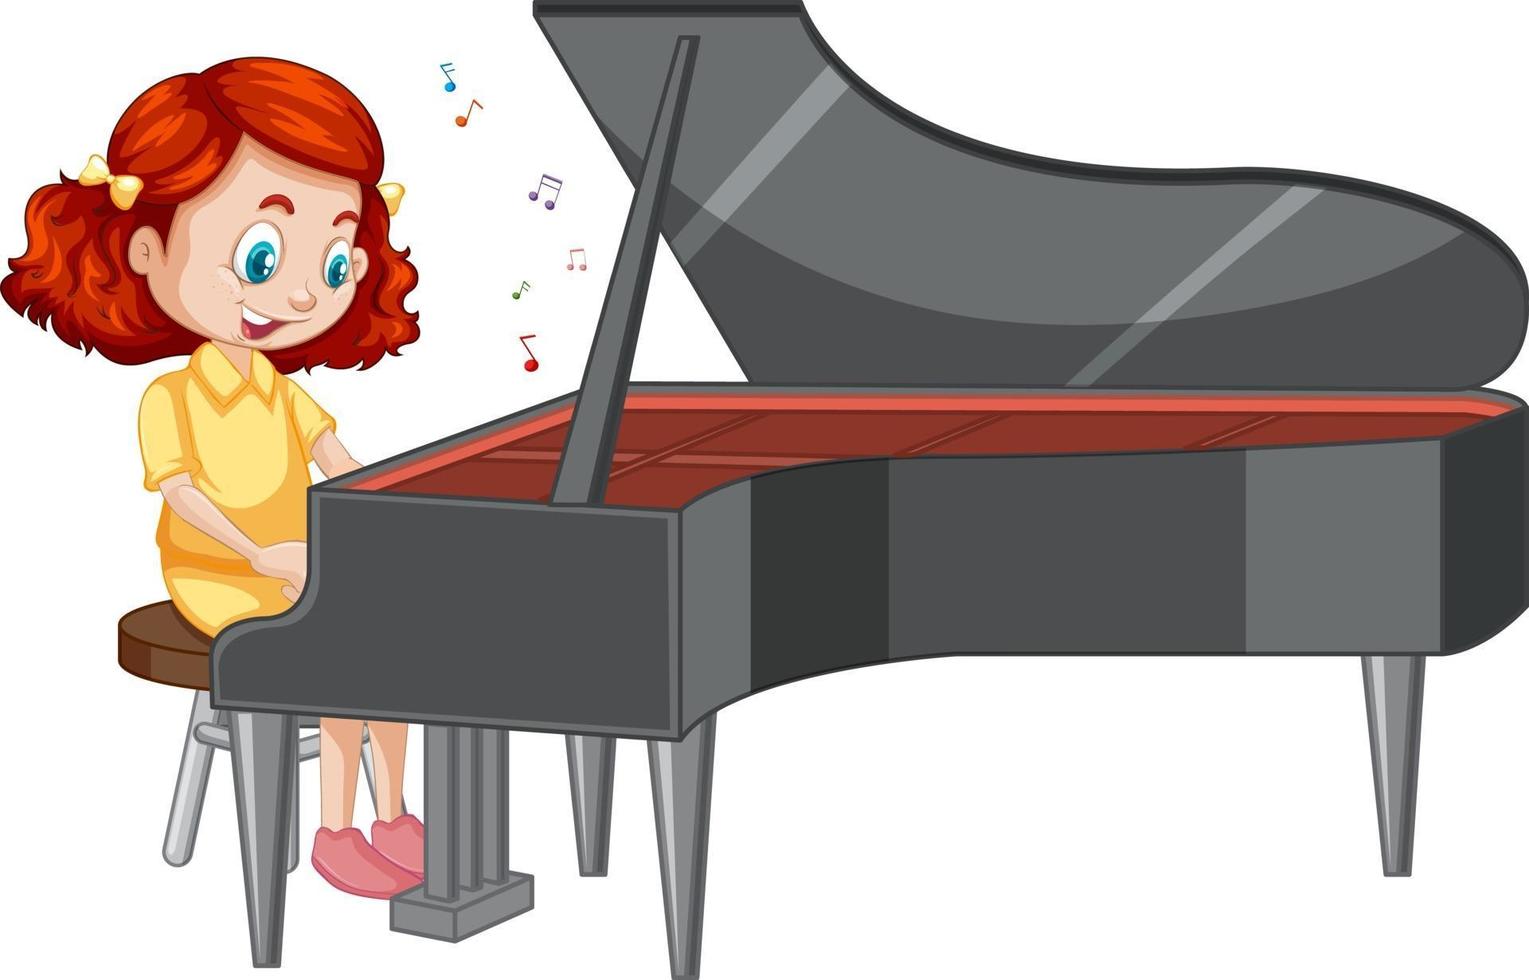 A girl cartoon character playing piano vector